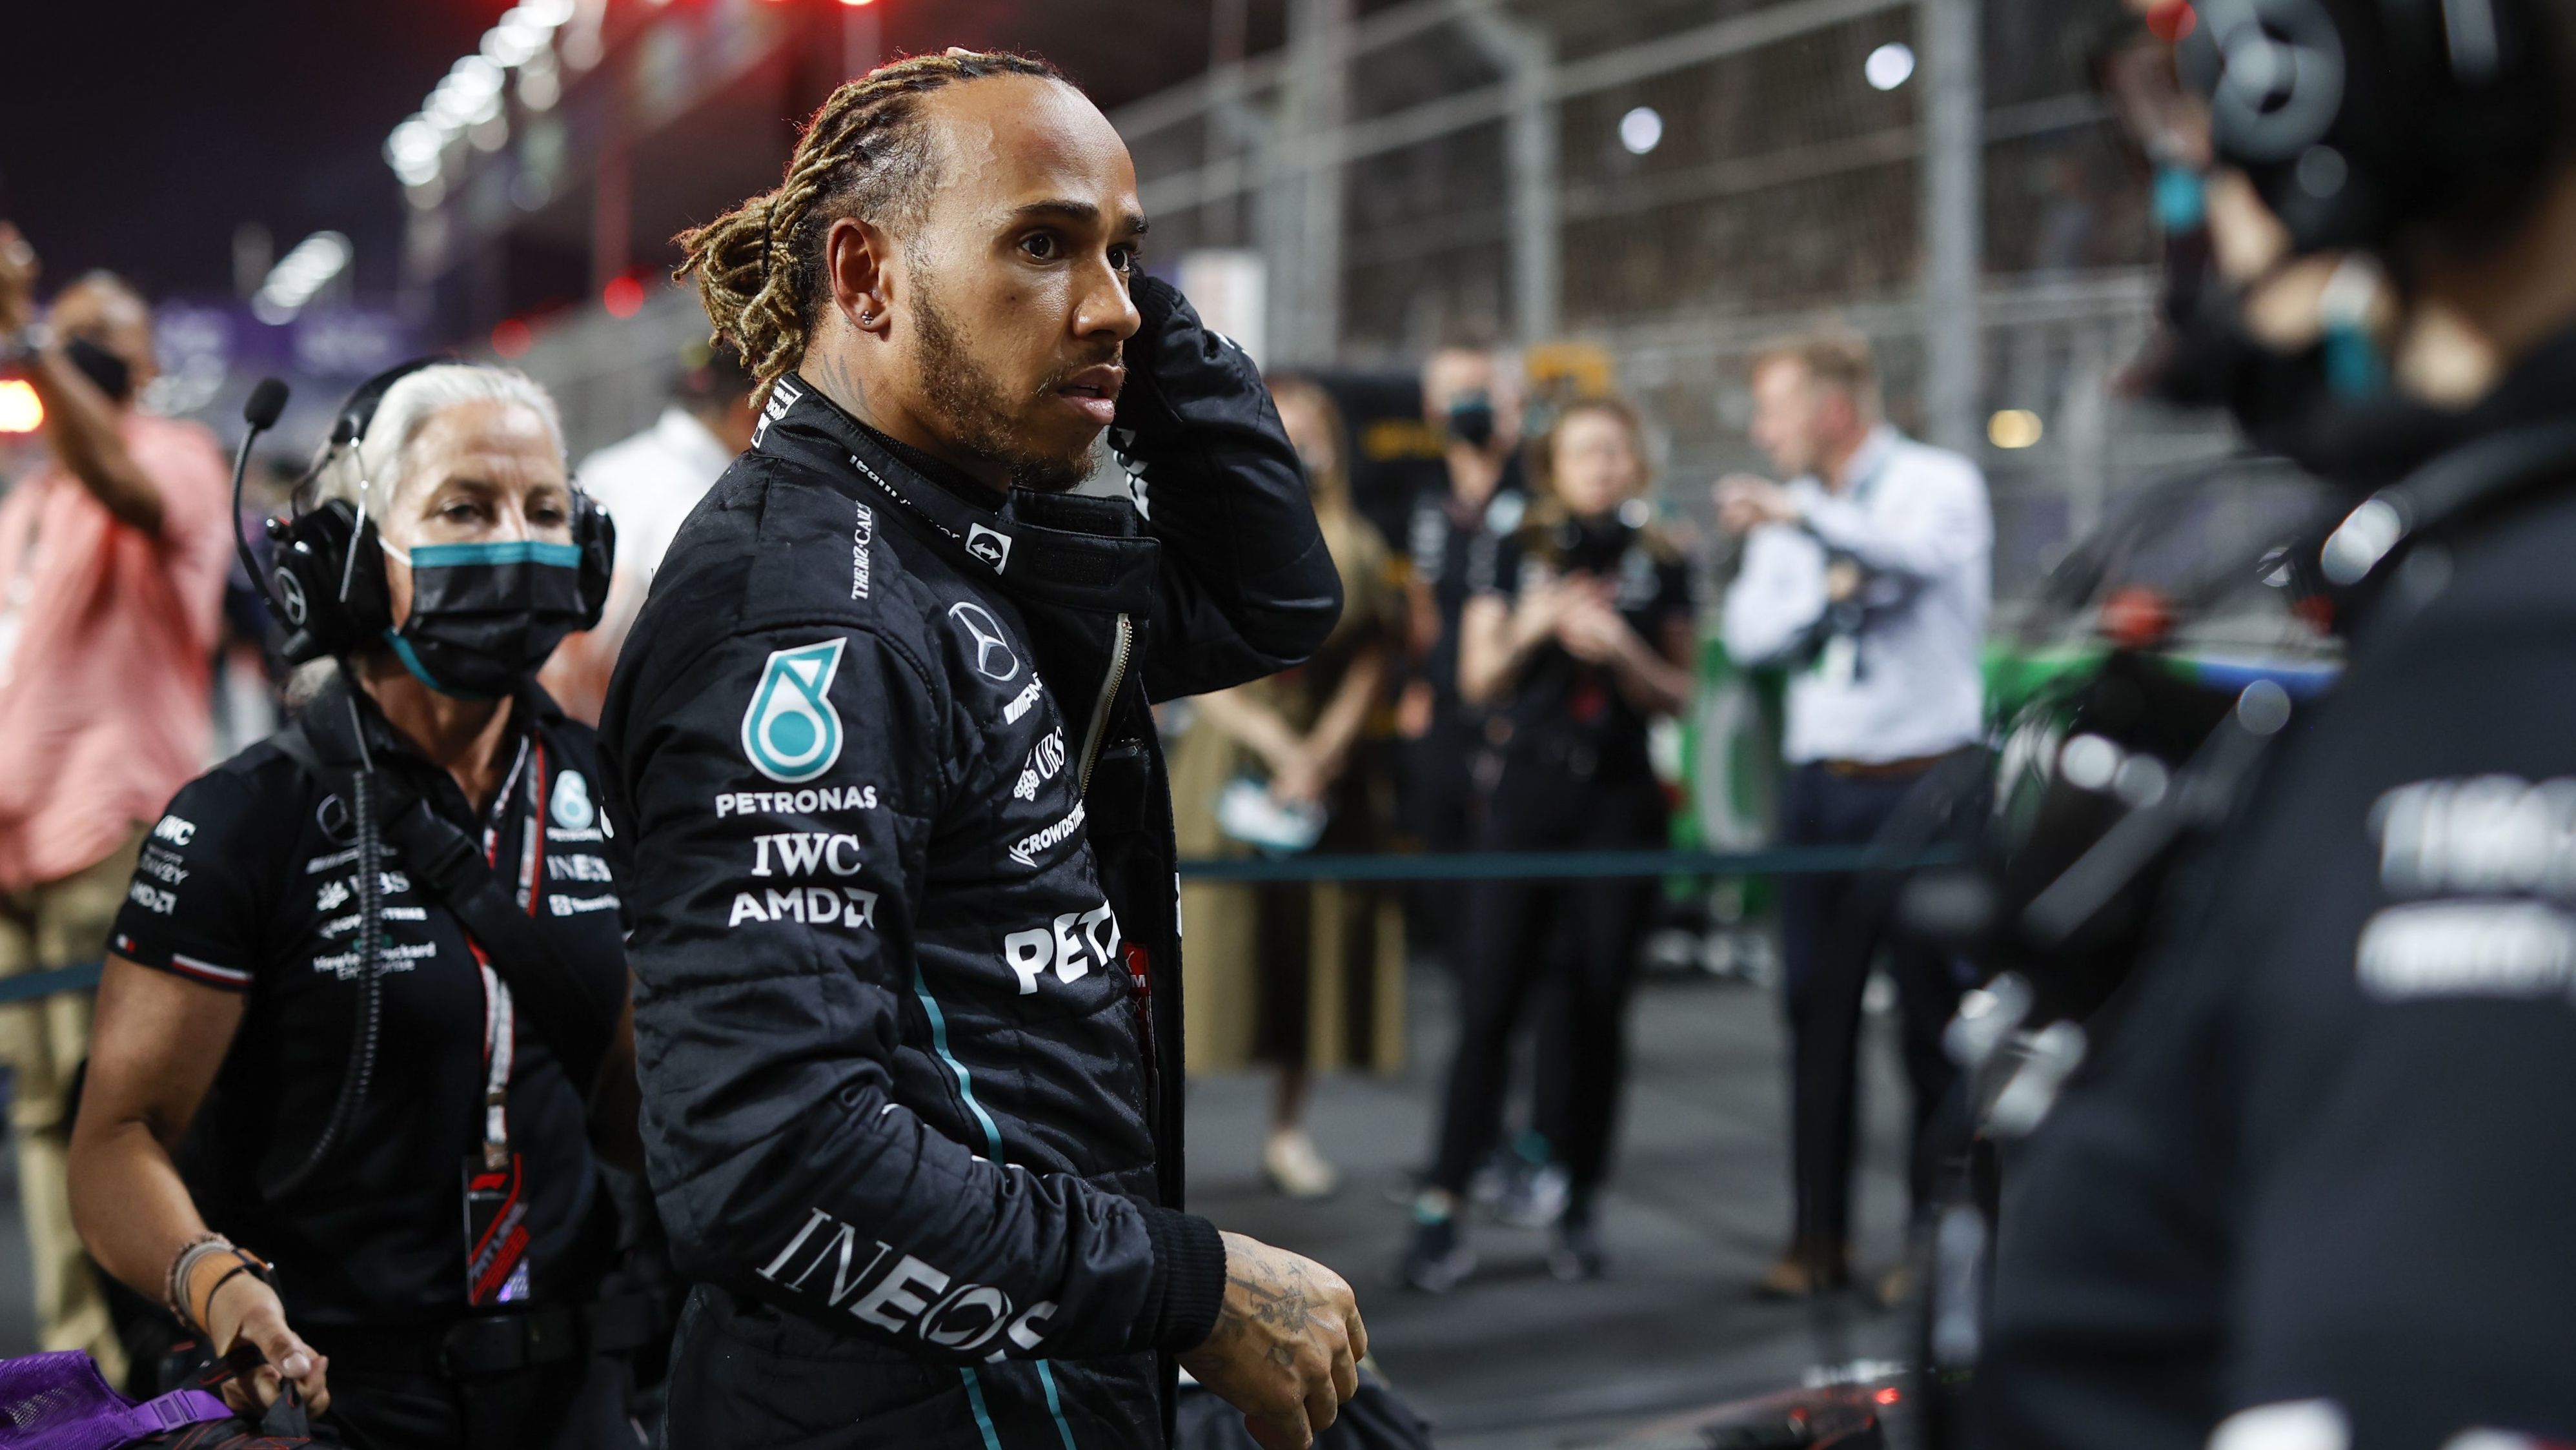 Lewis Hamilton finished 10th in the Saudi Arabian Grand Prix.